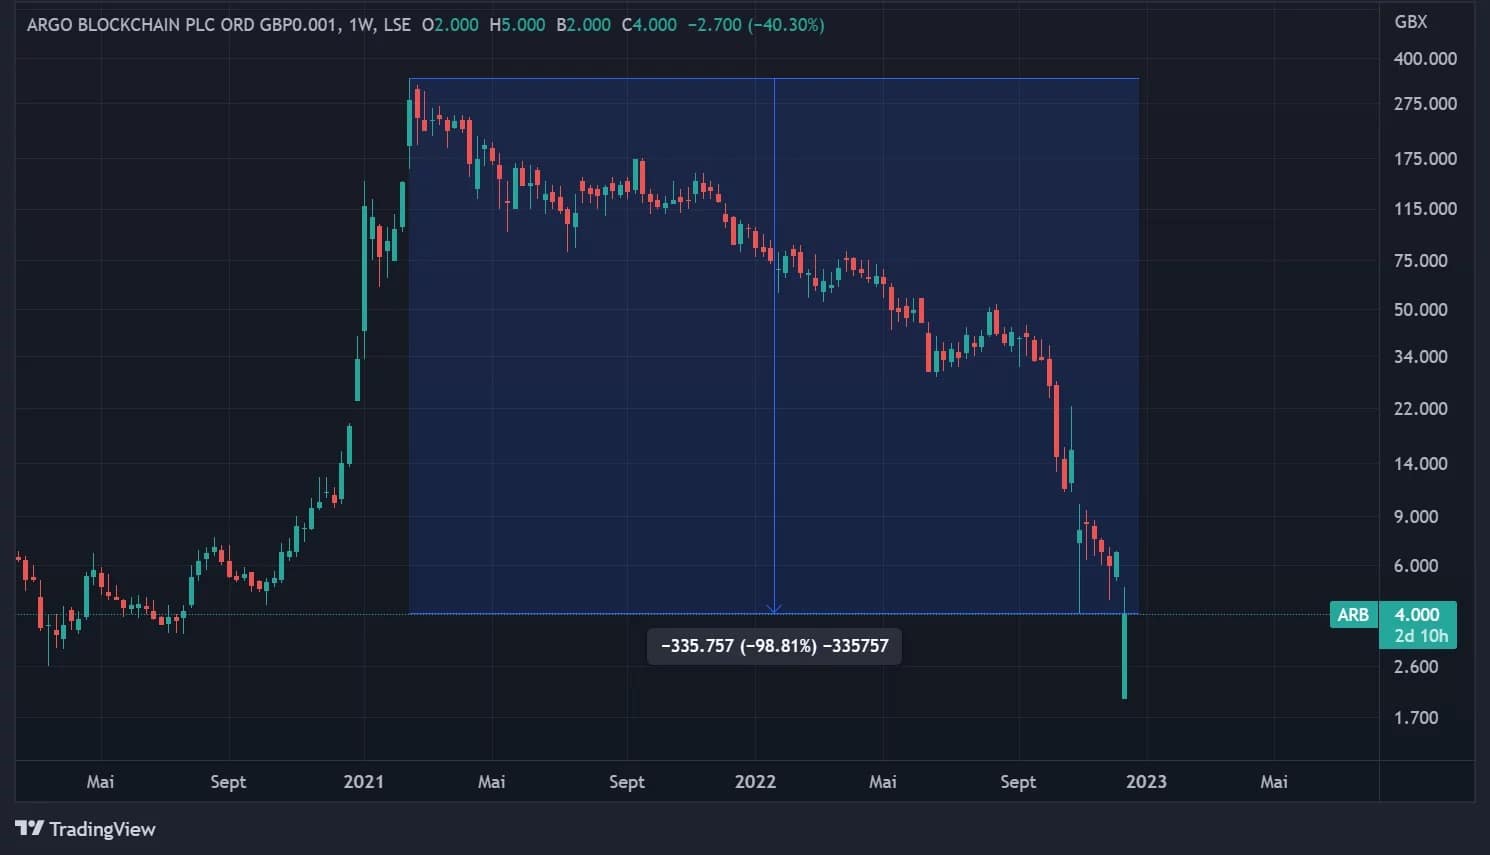 Figure 1 - Argo Blockchain share price on the London Stock Exchange